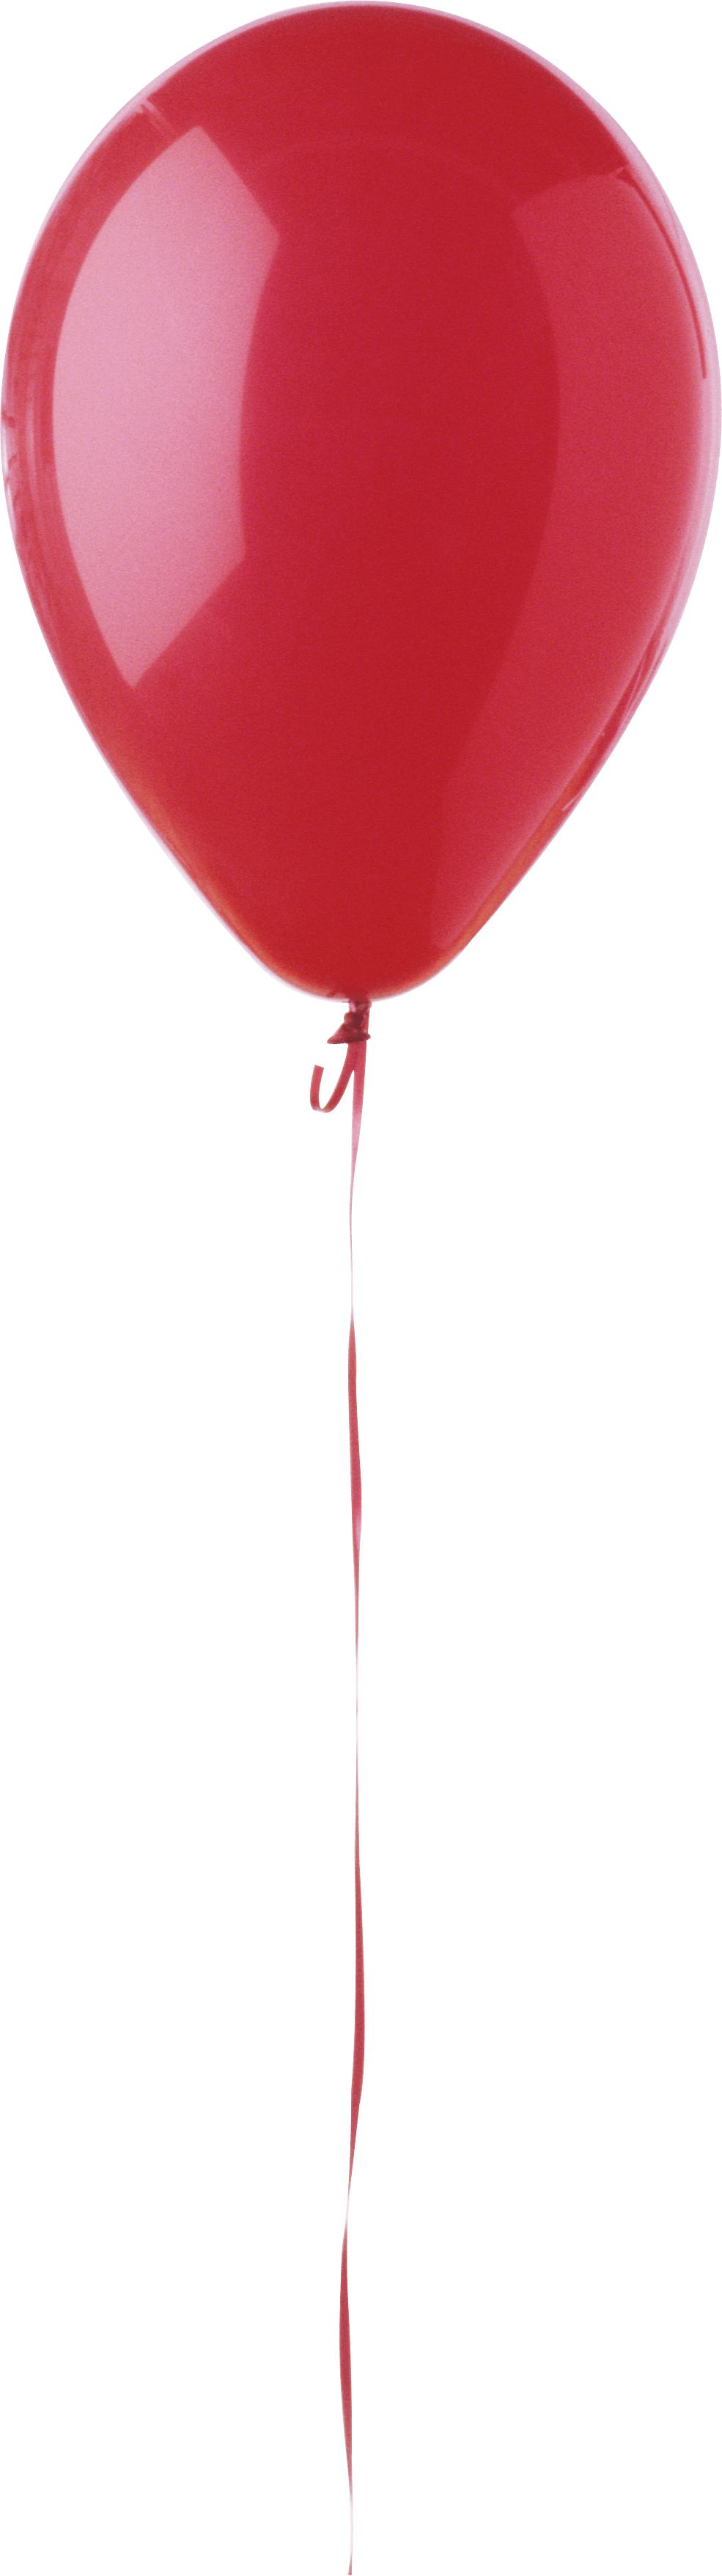 Balloons Png Image PNG Image